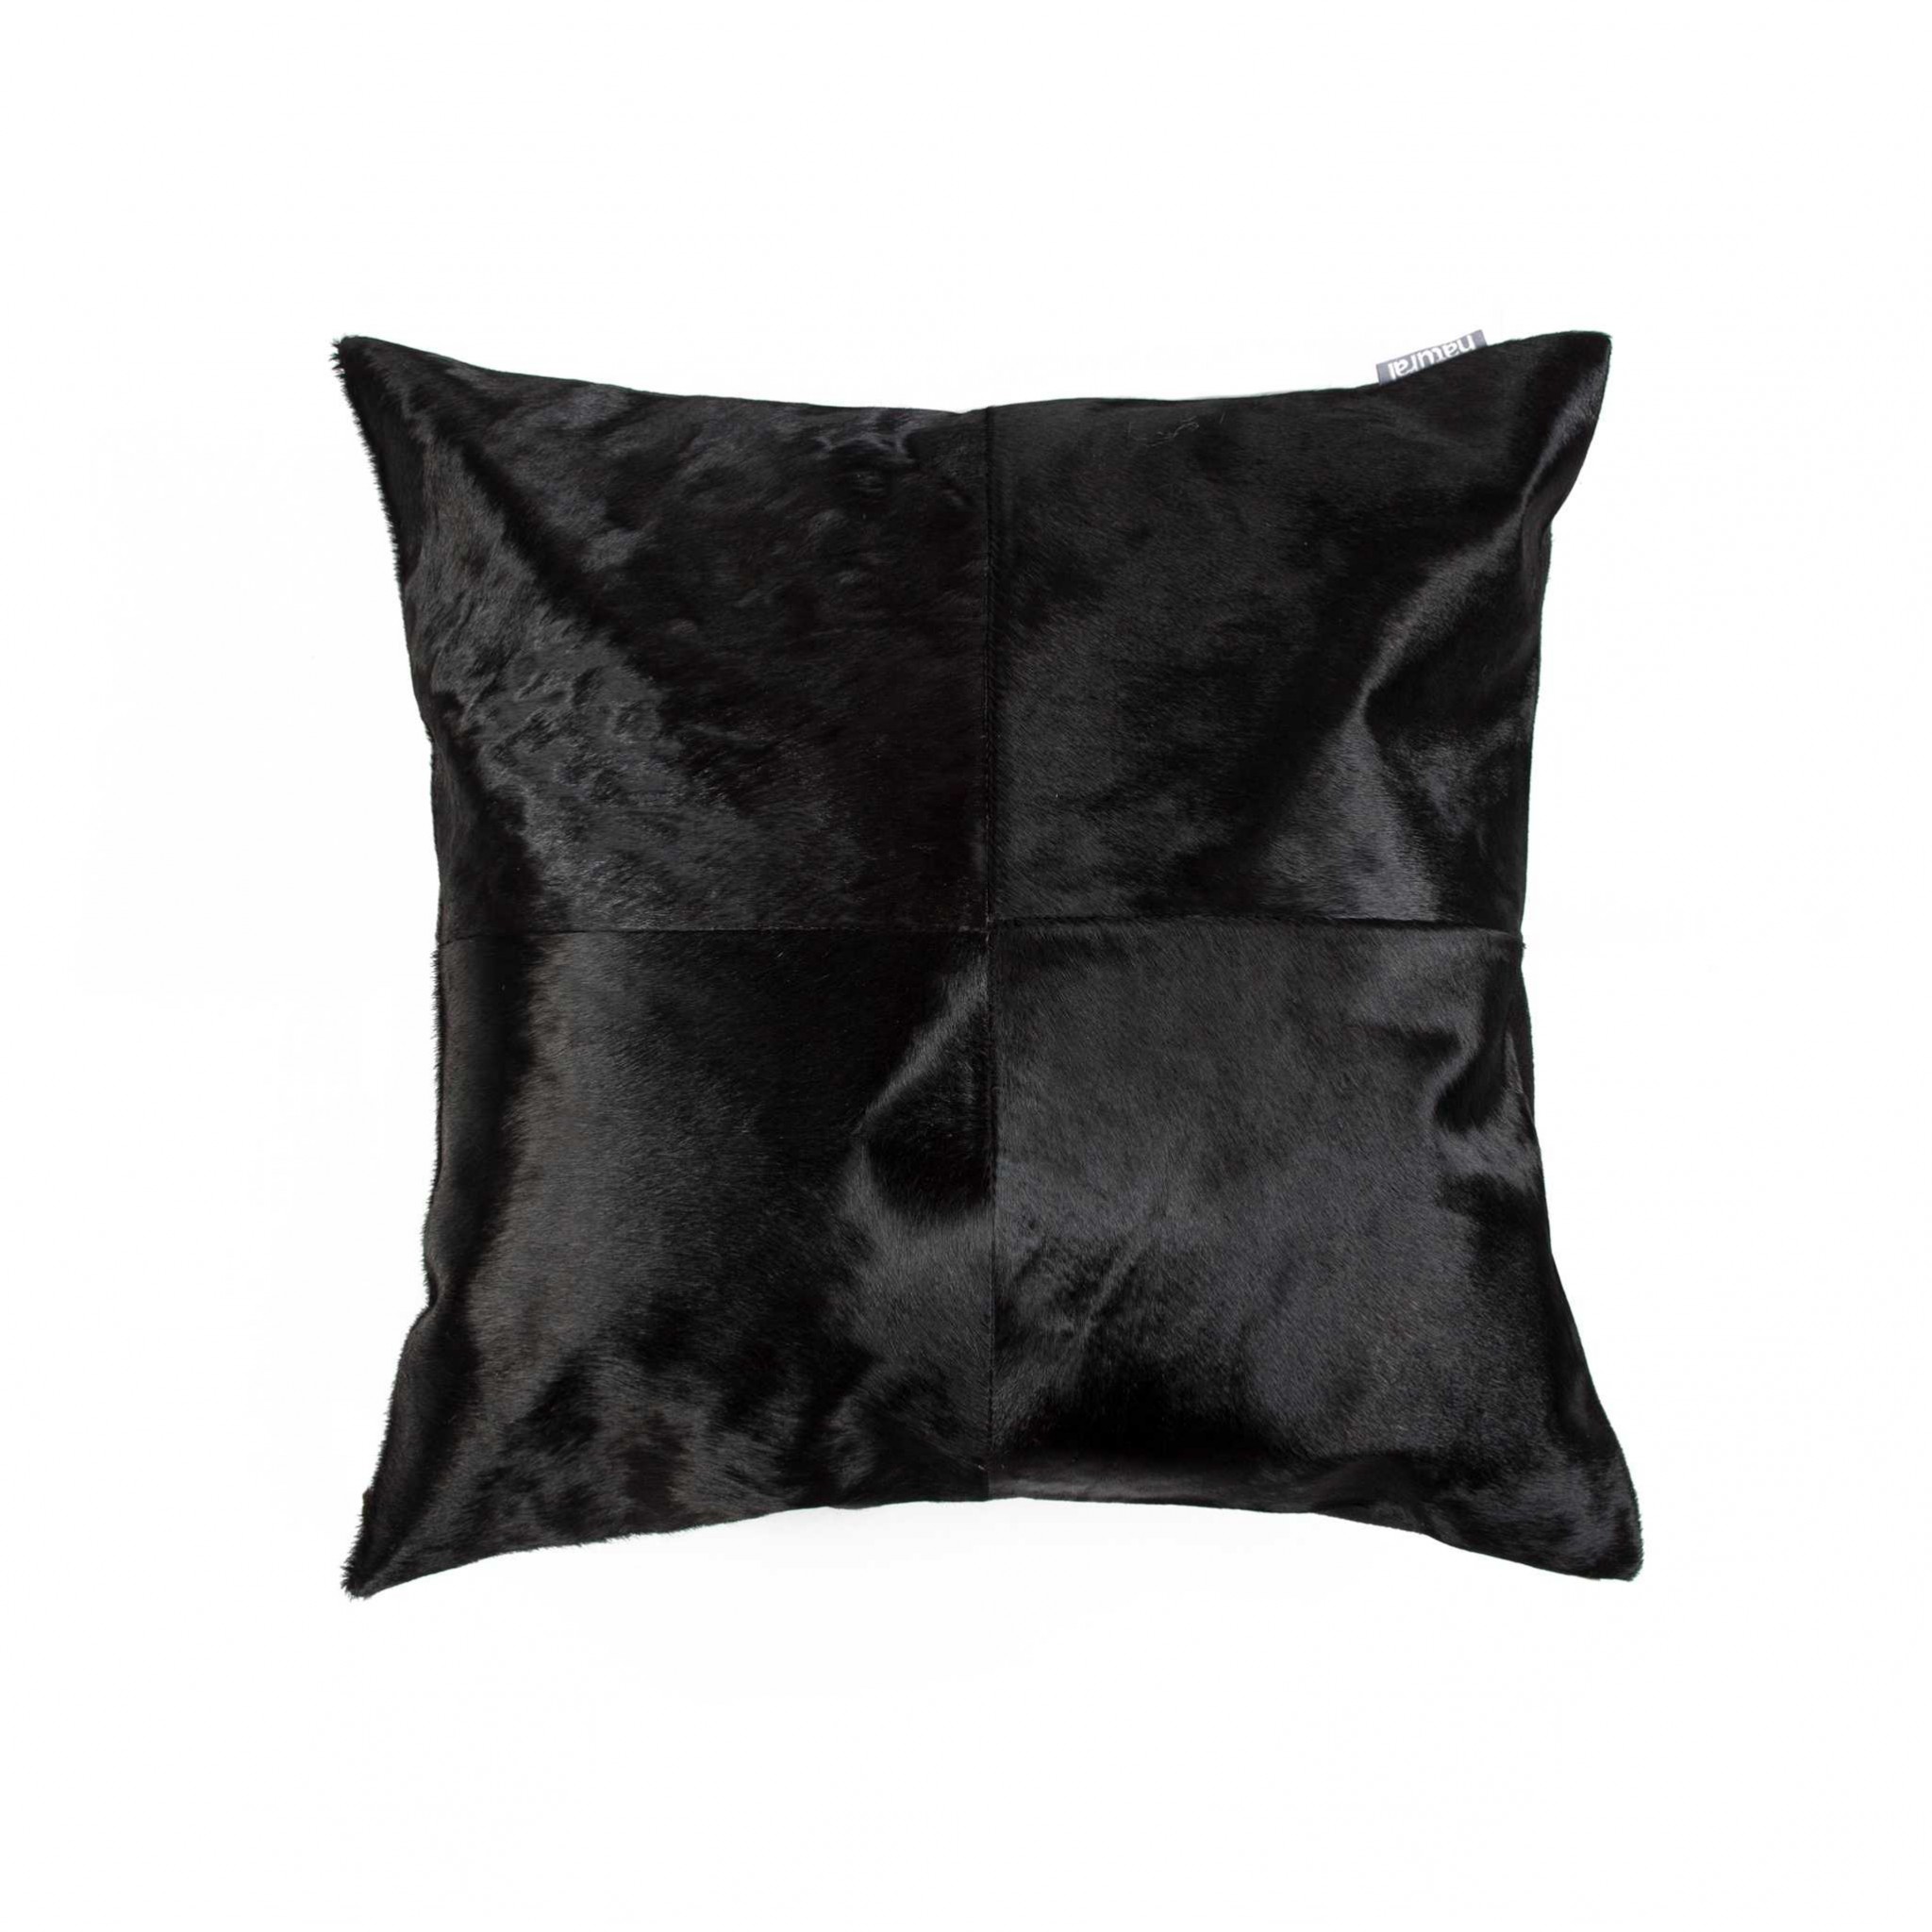 18" x 18" x 5" Black Quattro - Pillow